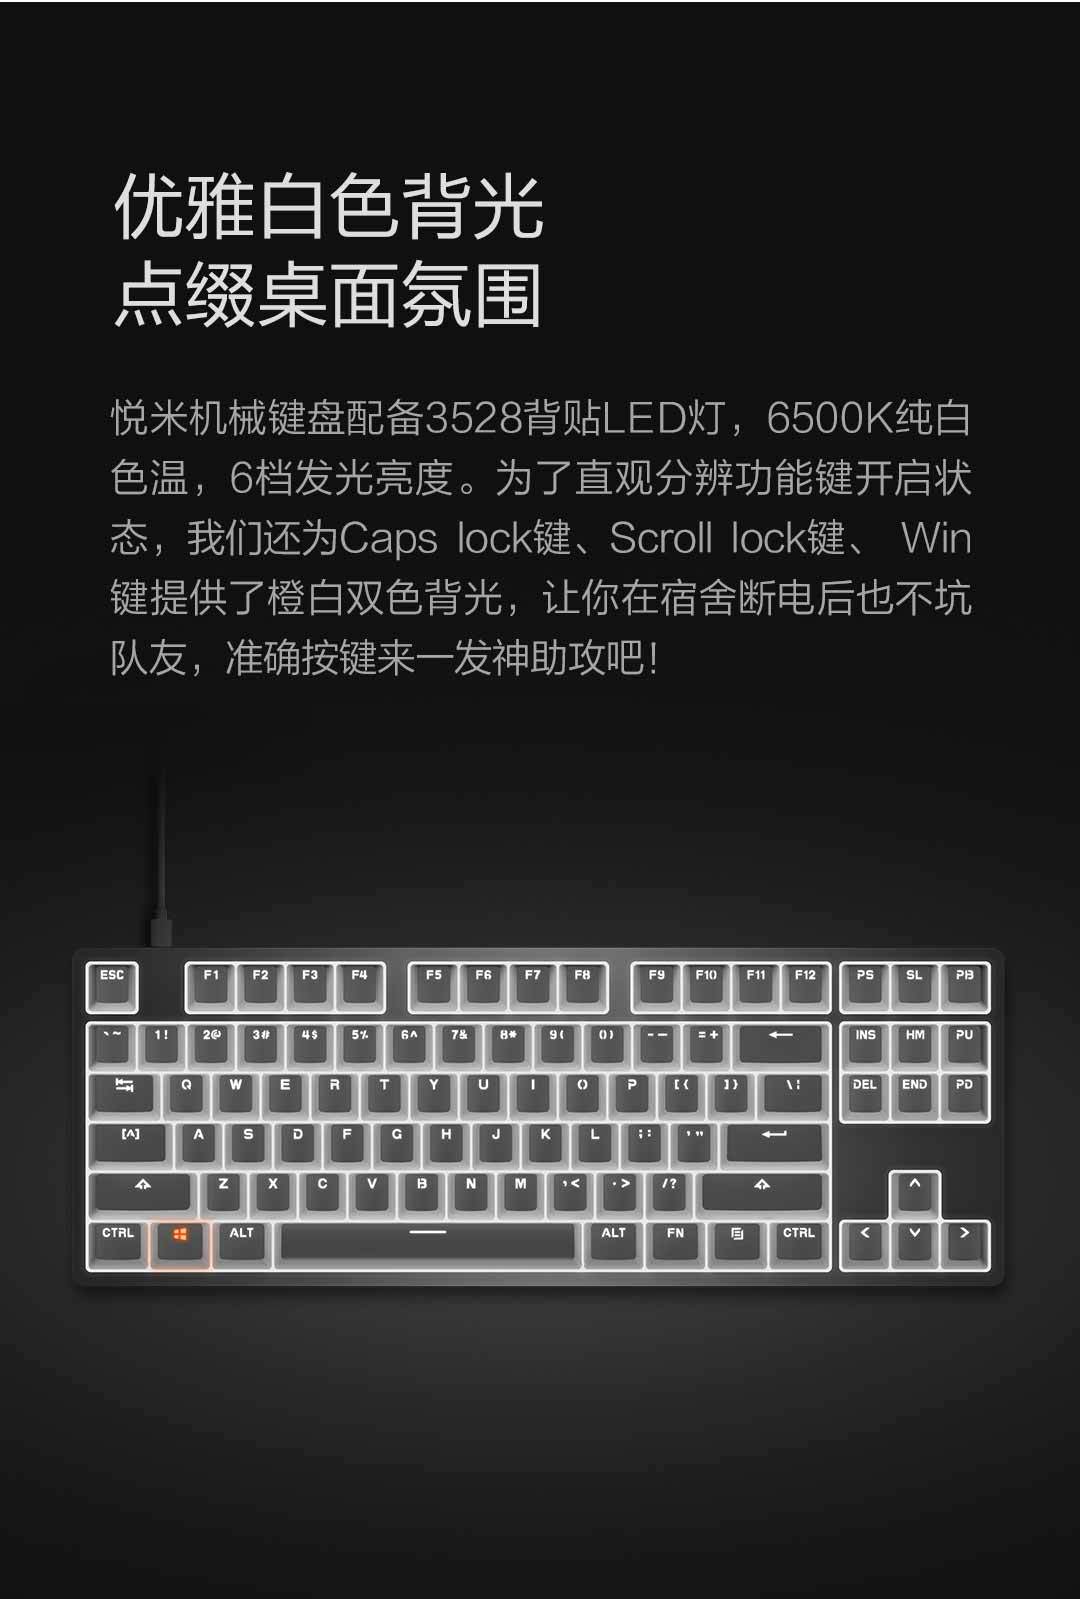 yuemi-mechanical-keyboard-10